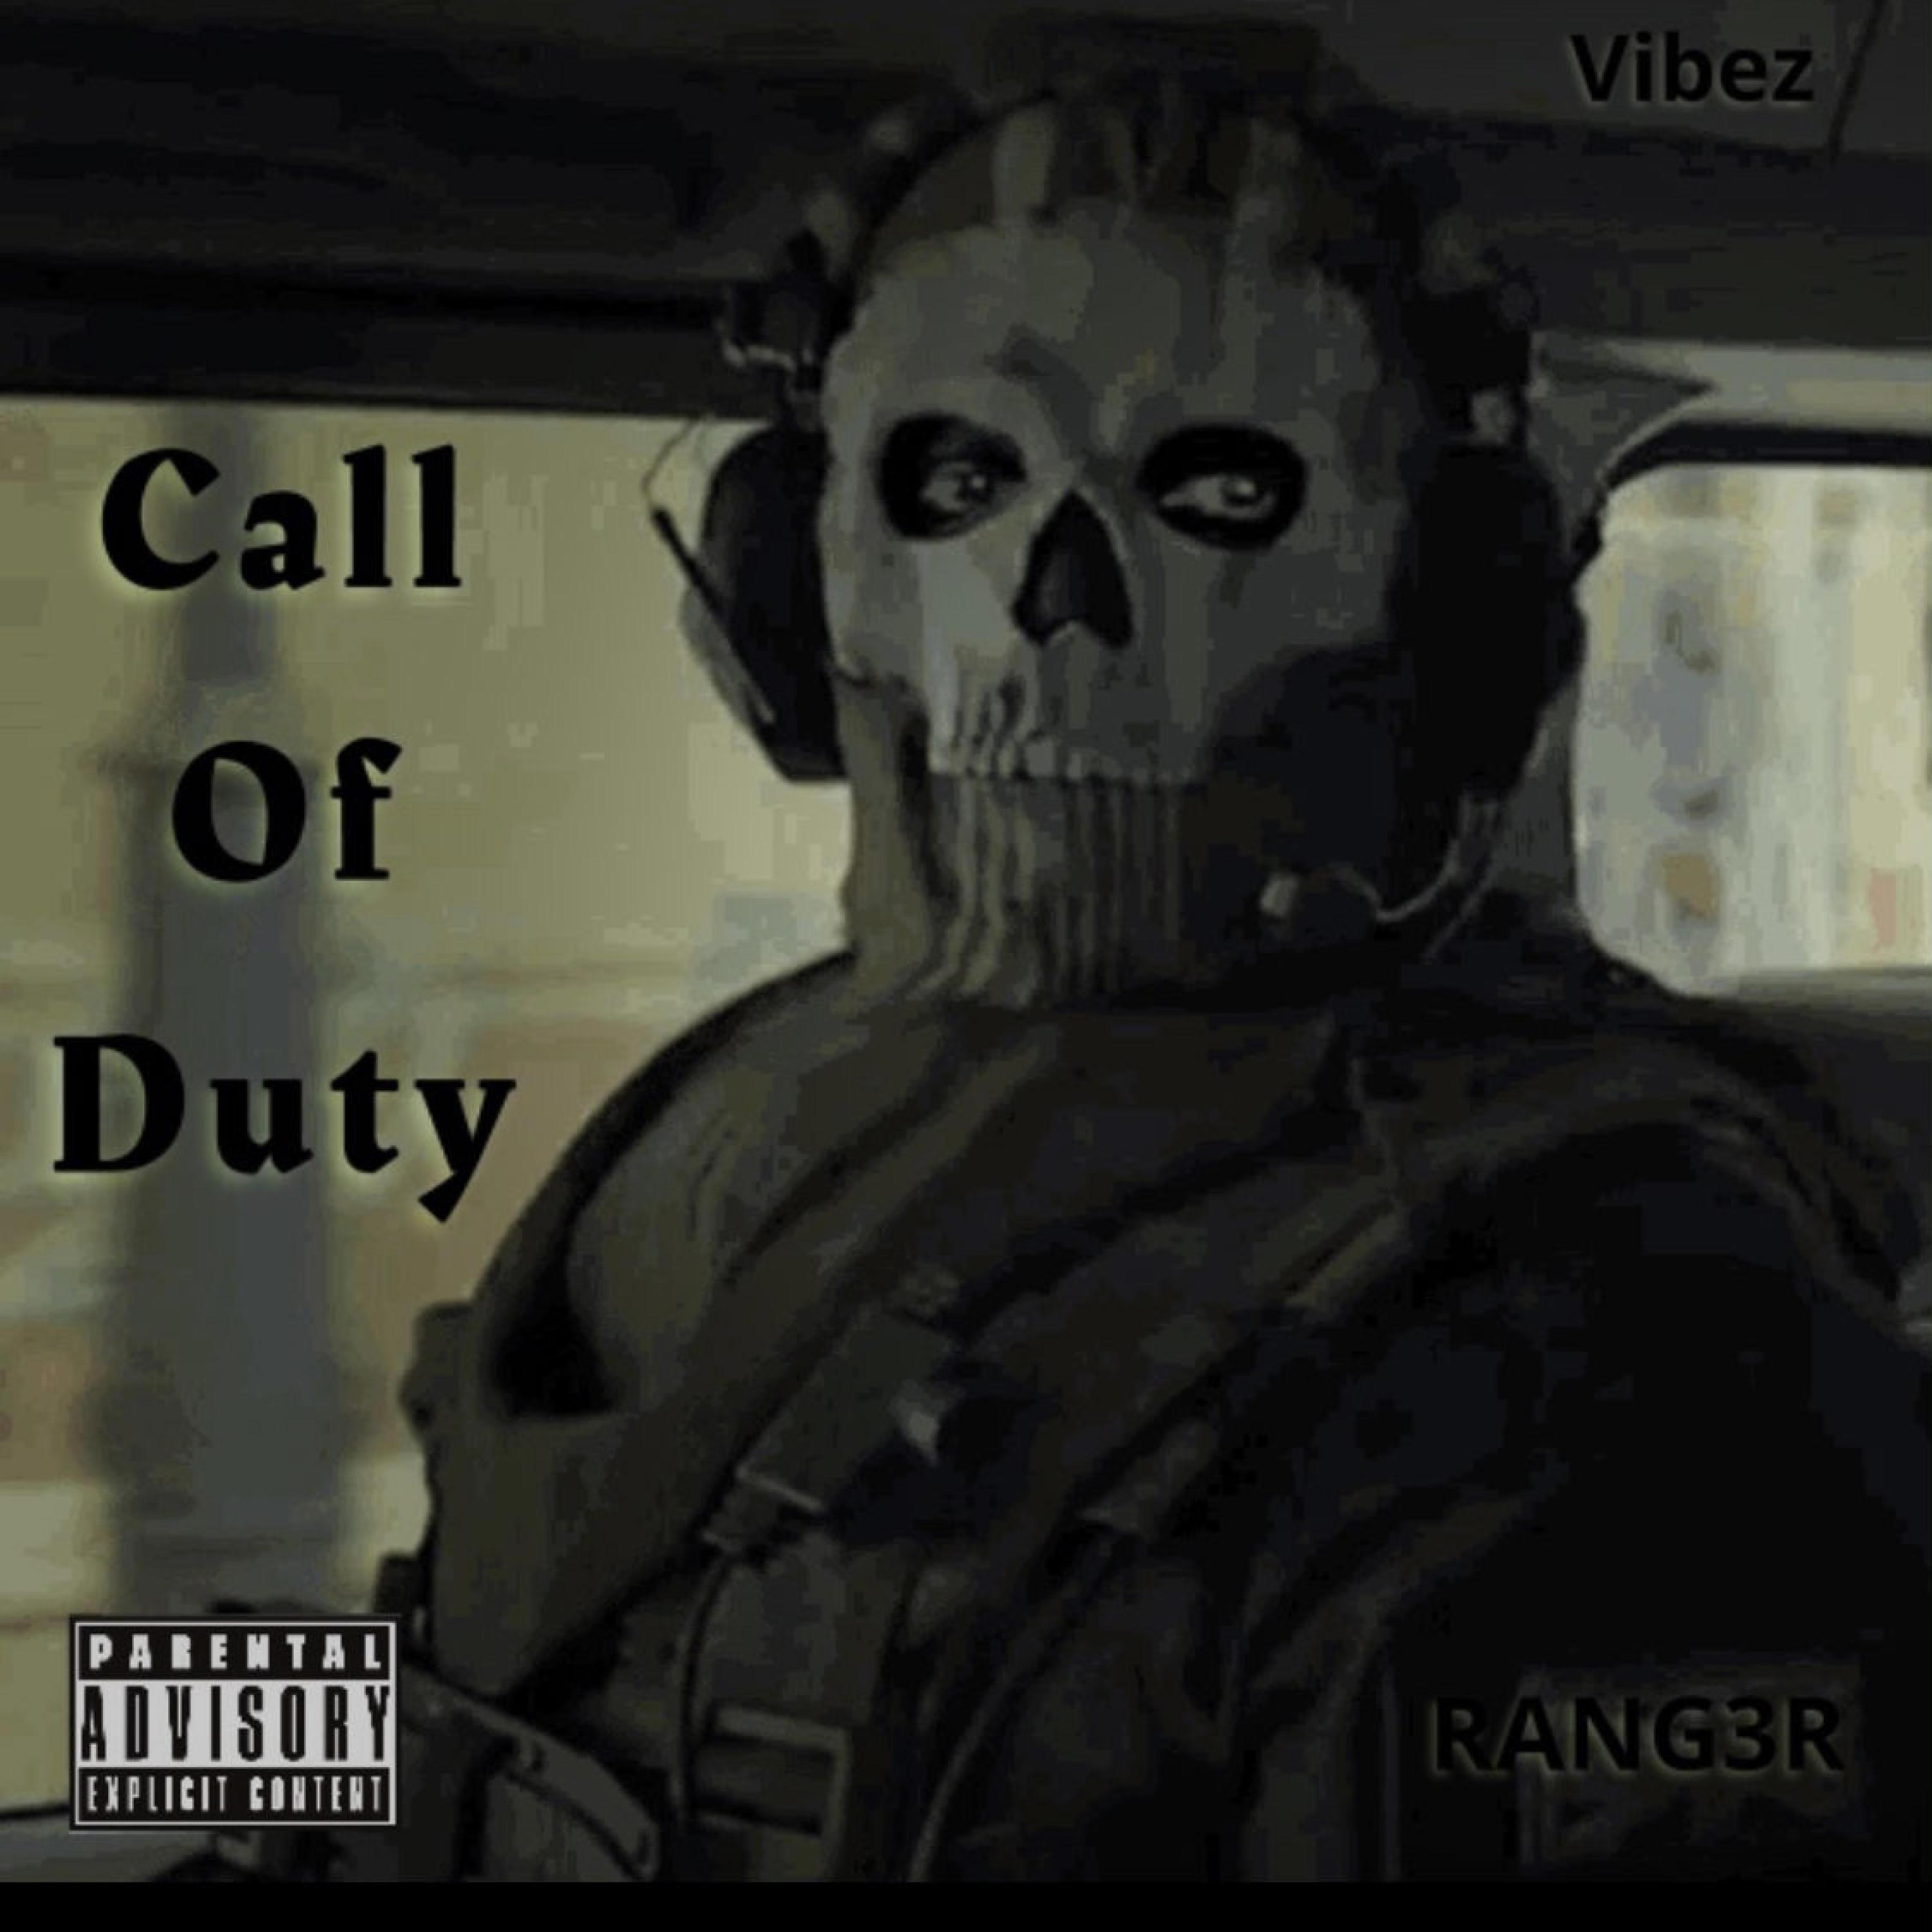 RANG3R - Call Of Duty (feat. Vibez)